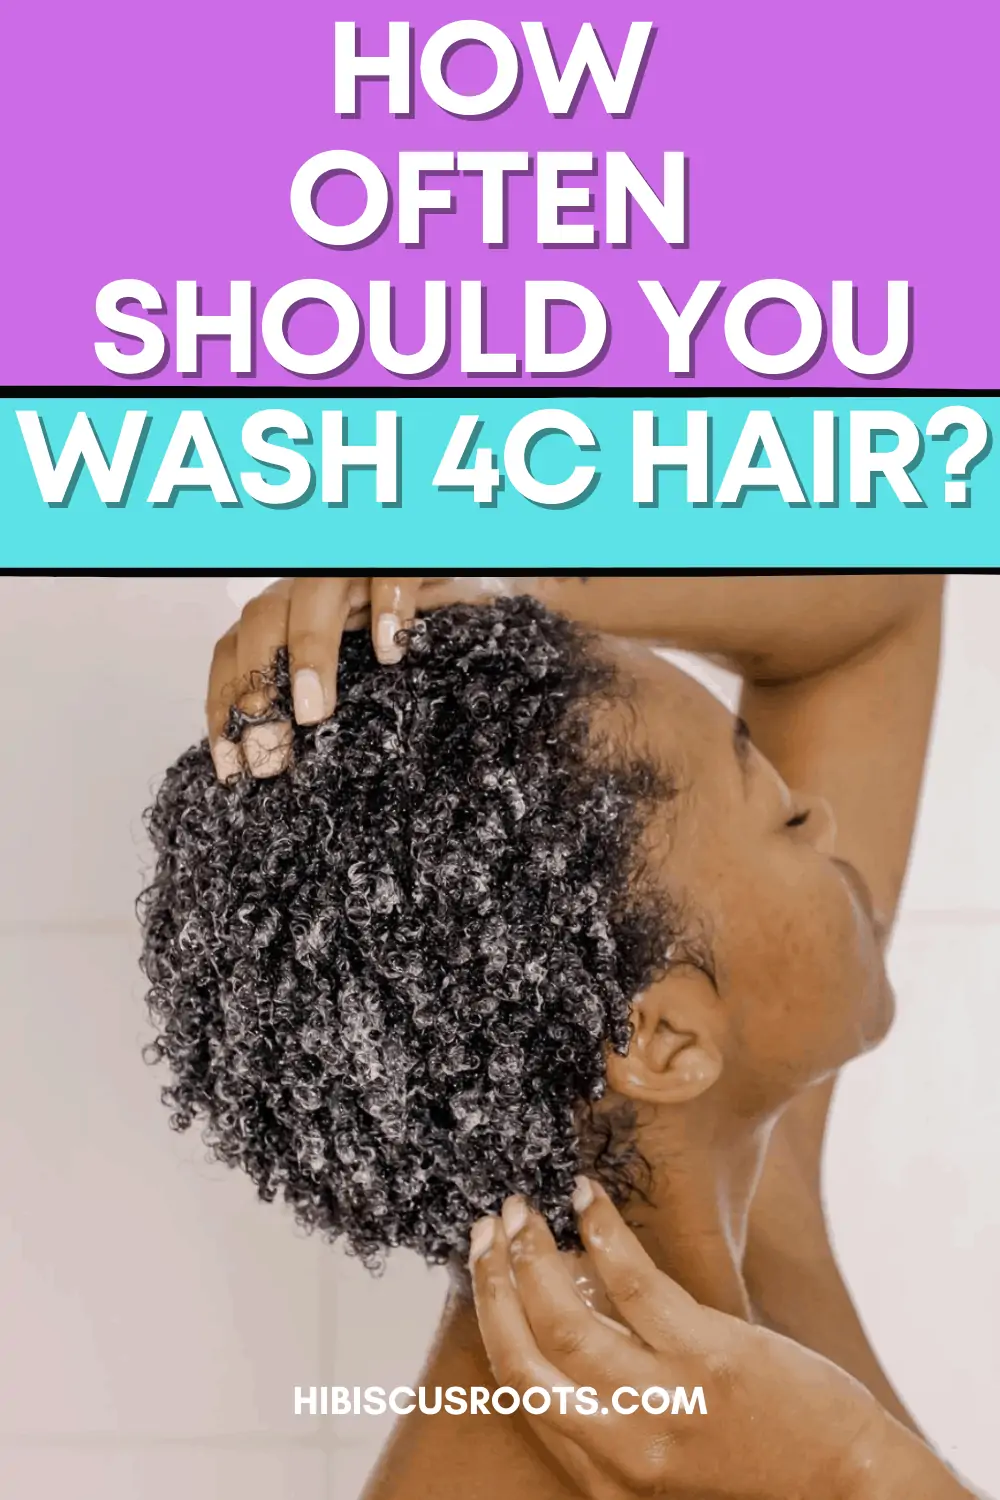 Washing Your 4C Natural Hair Wrong might be Ruining Your Progress!